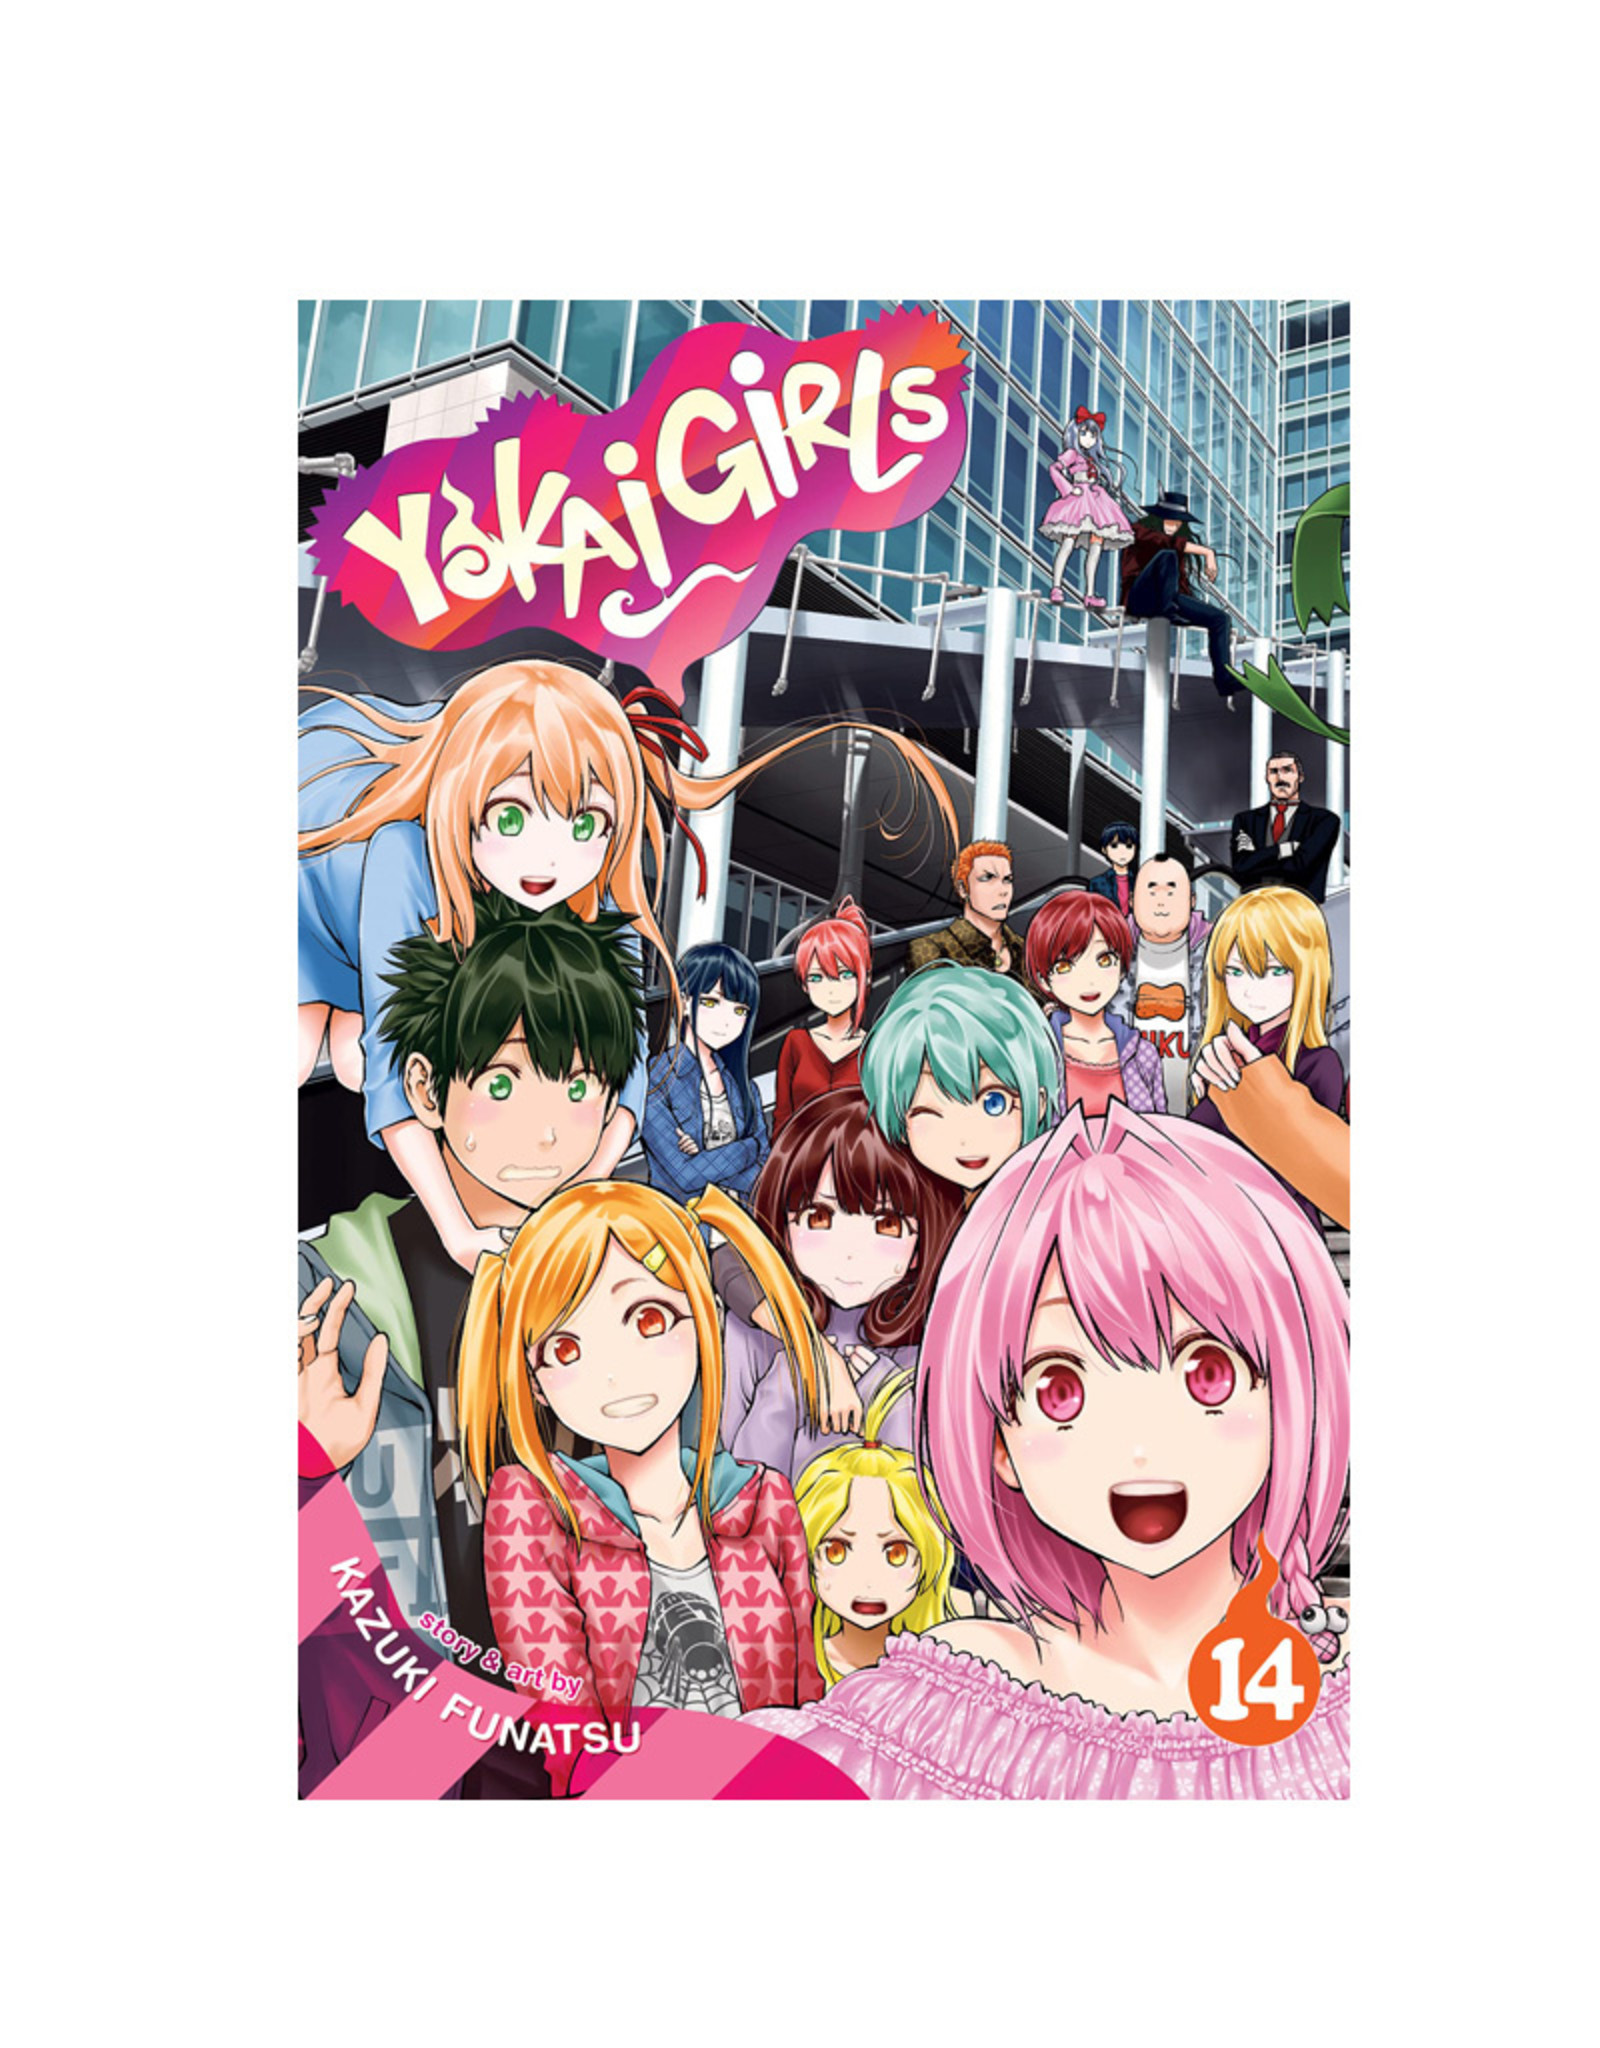 SEVEN SEAS Yokai Girls Volume 14